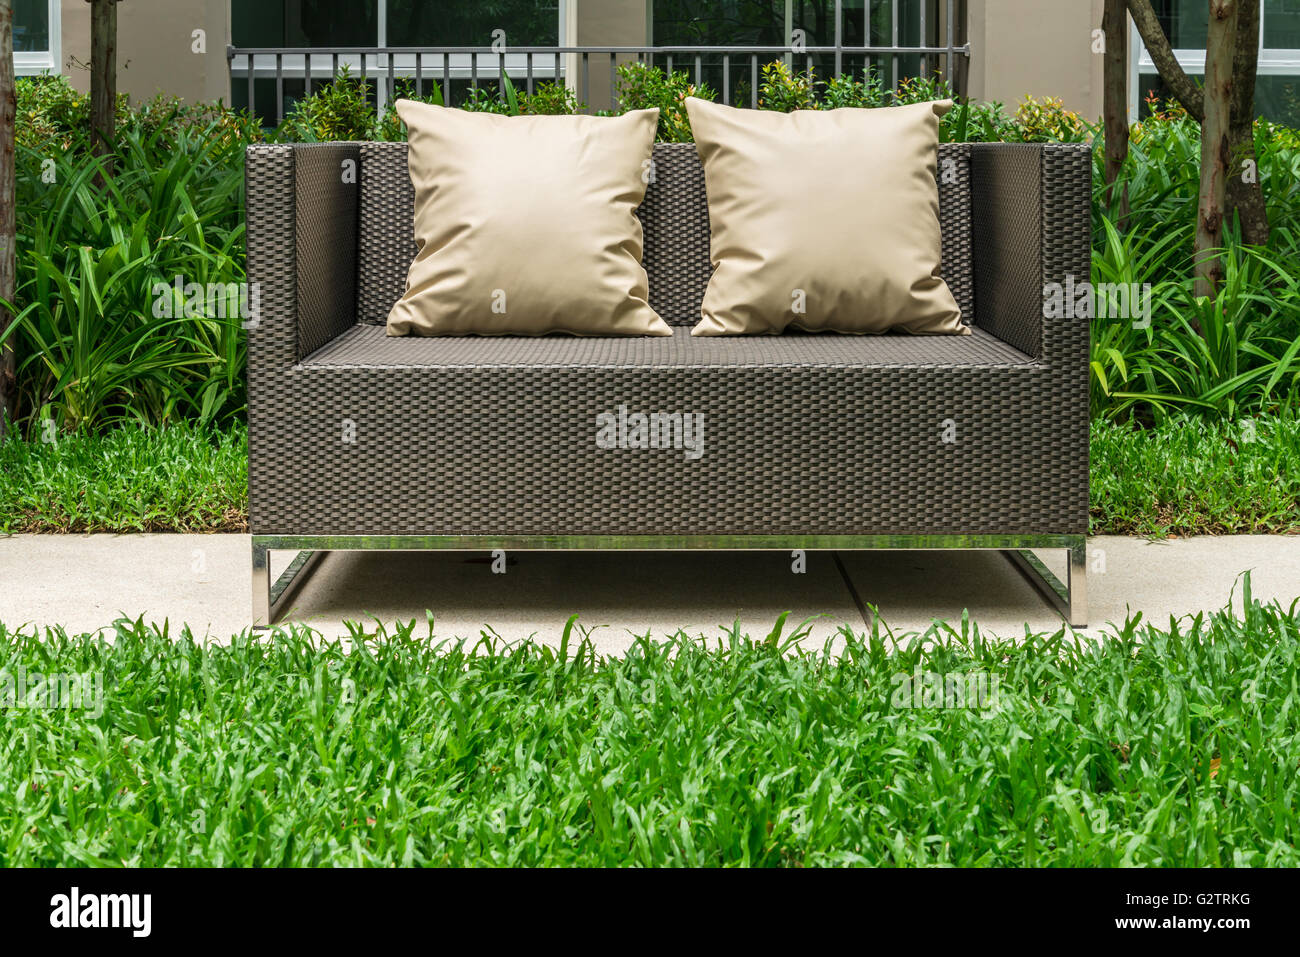 Terrasse, Sitzecke mit Rattan sofa Stockfotografie - Alamy